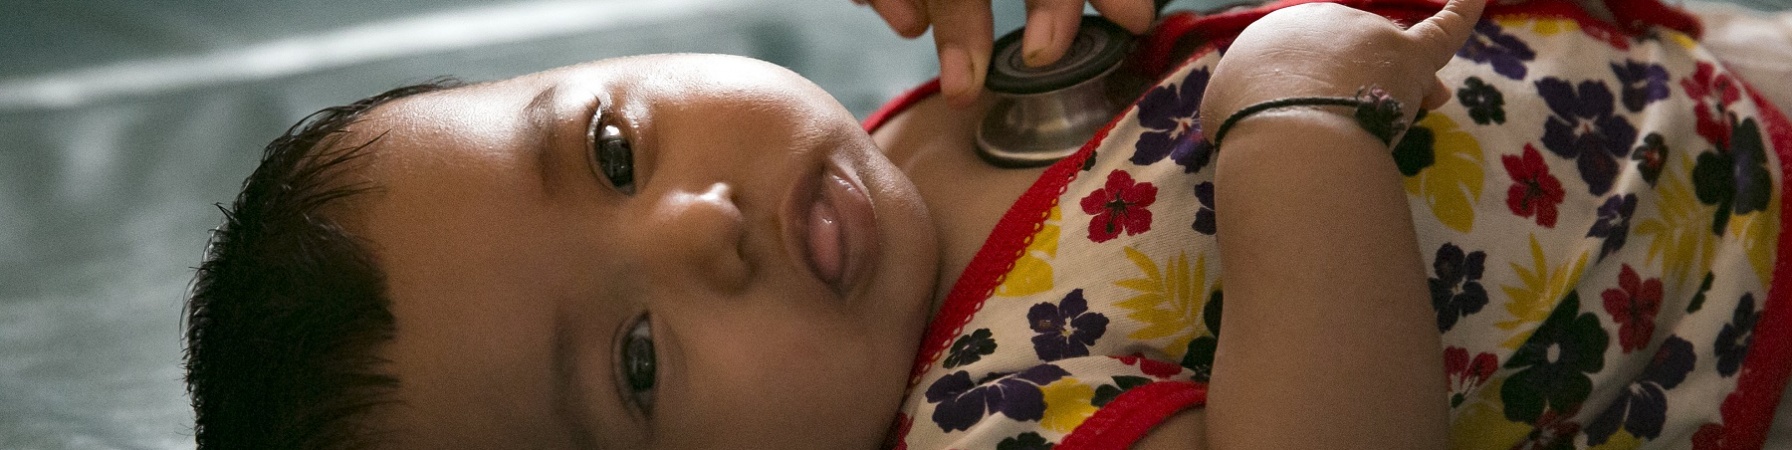 Bambina neonata Rohingya viene visitata stesa con stetoscopio.